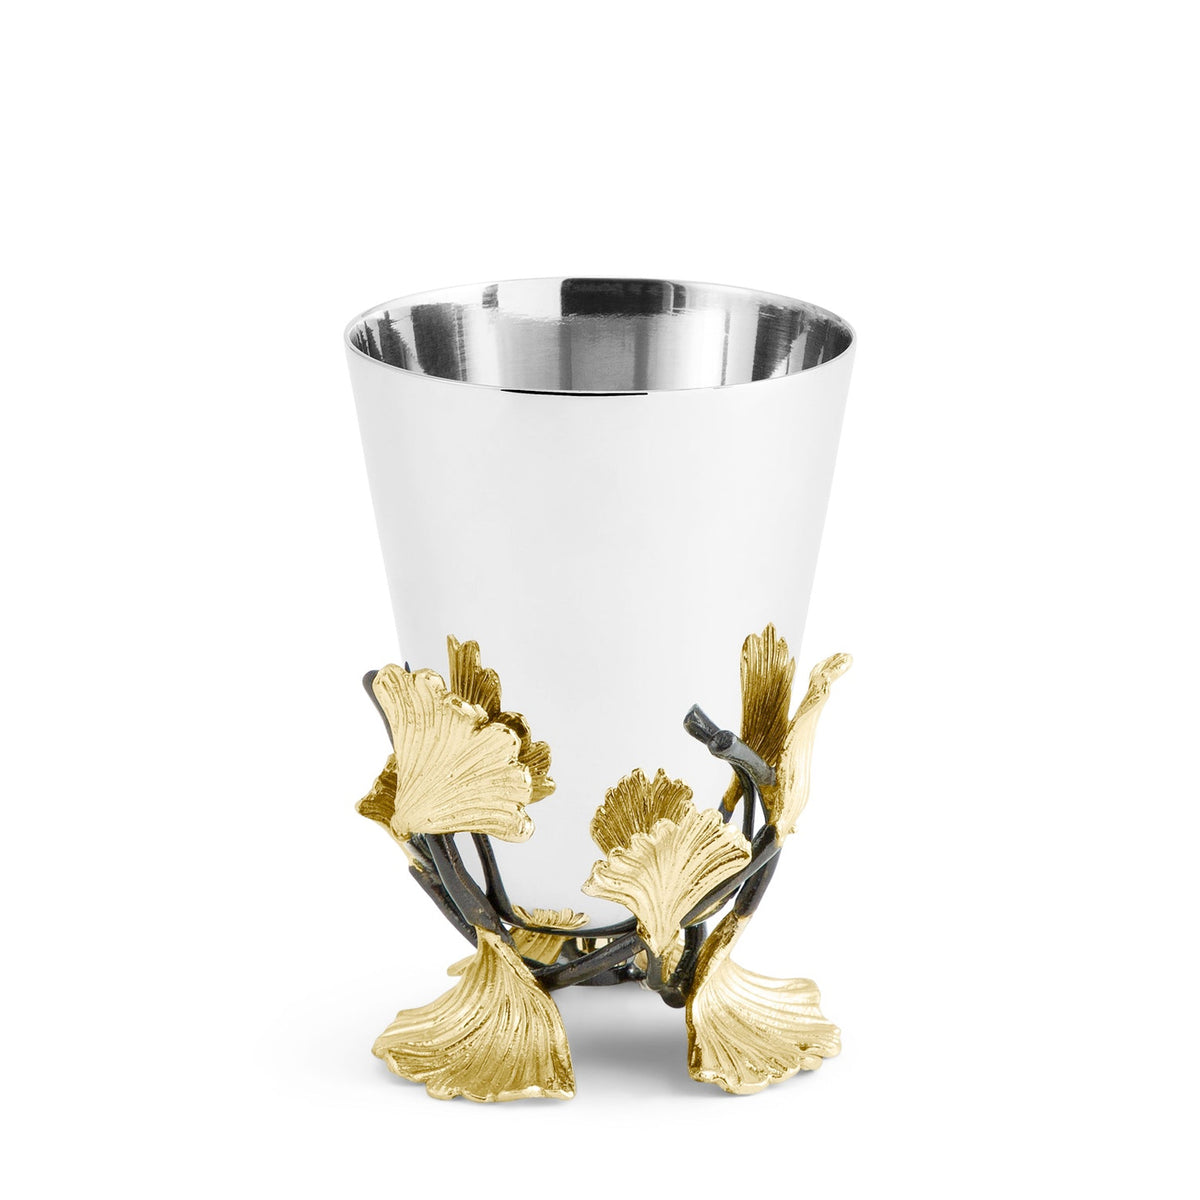 Golden Ginkgo Vase, Michael Aram - RSVP Style